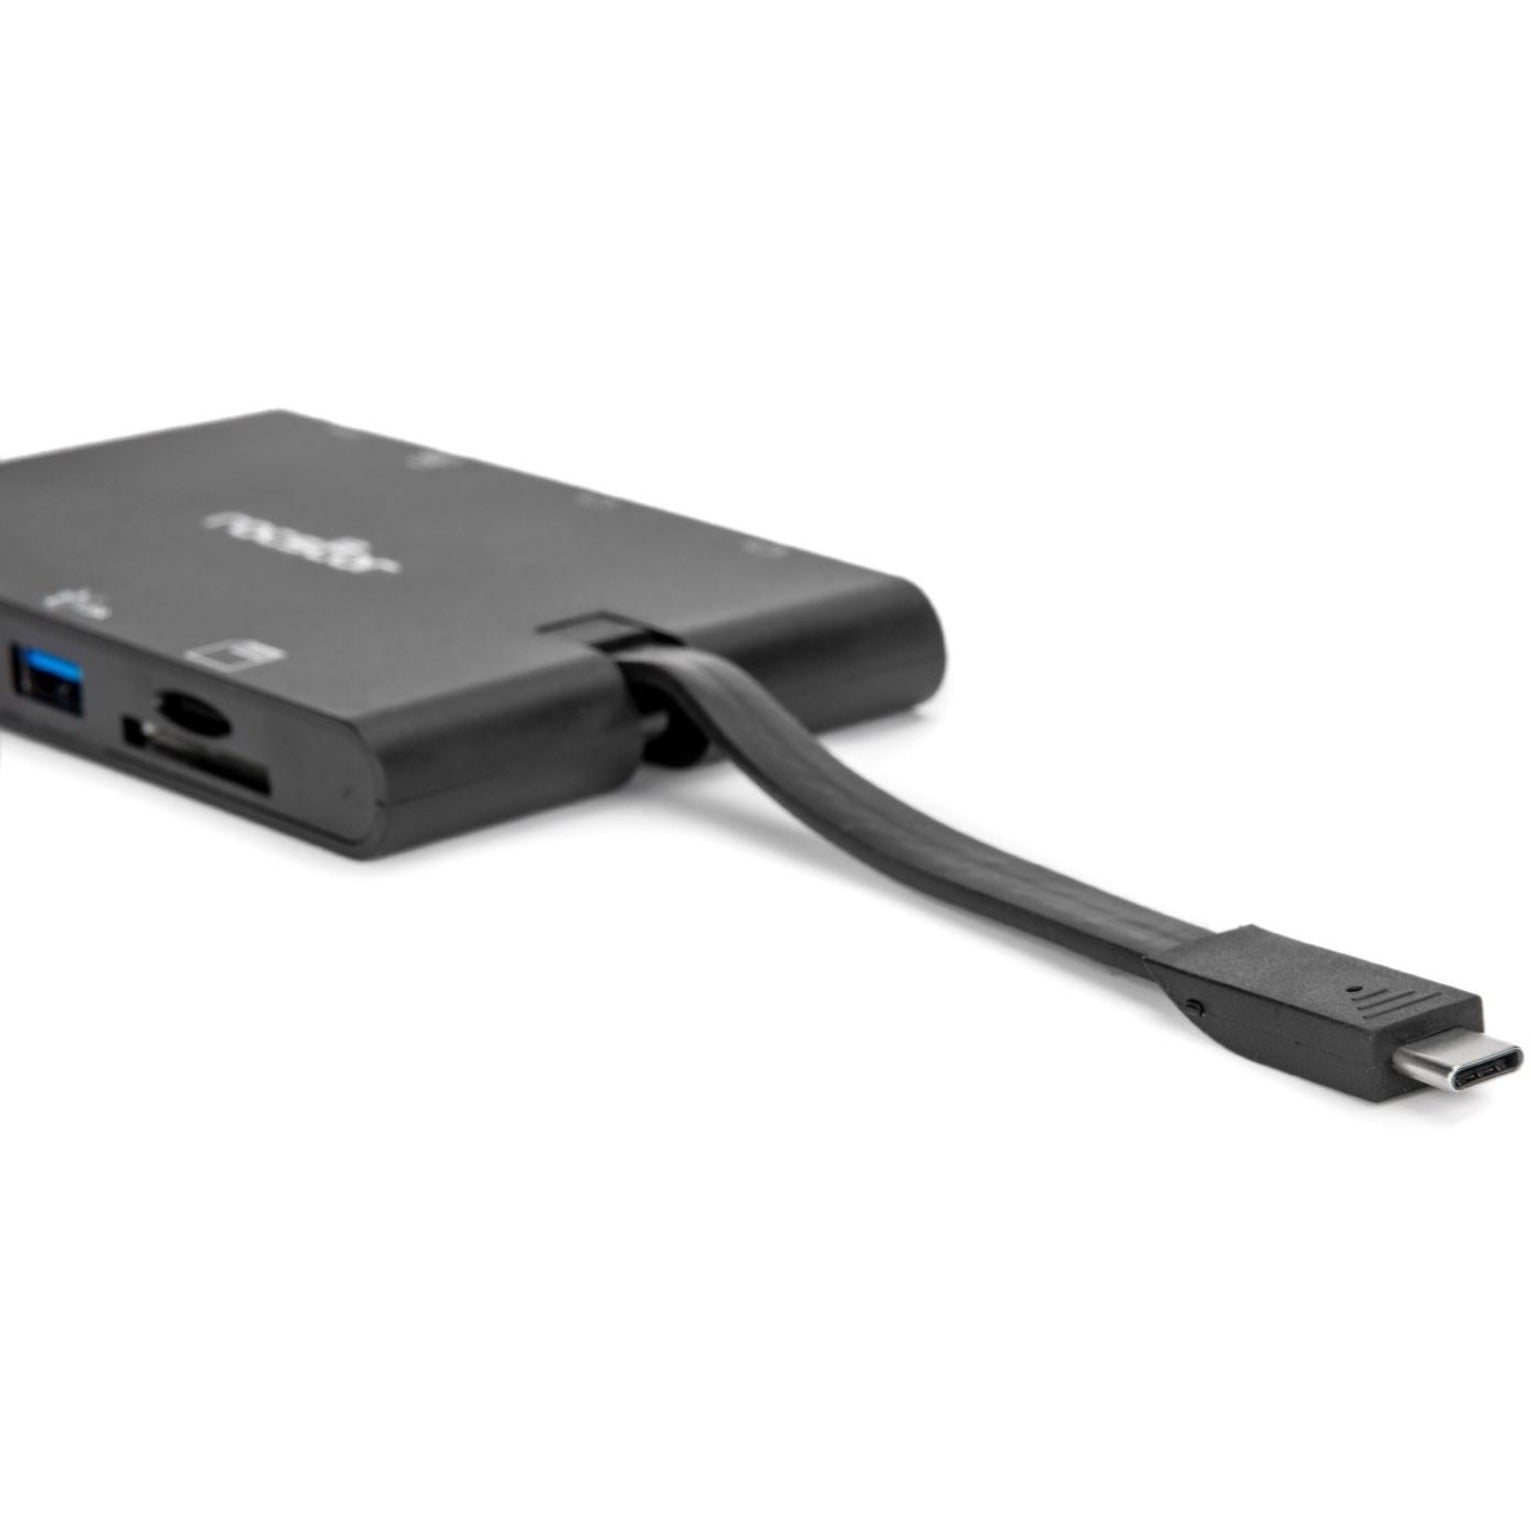 Rocstor Y10A263-B1 Portable USB-C Multiport Adapter, HDMI VGA USB 3.0 SD& MICRO SD